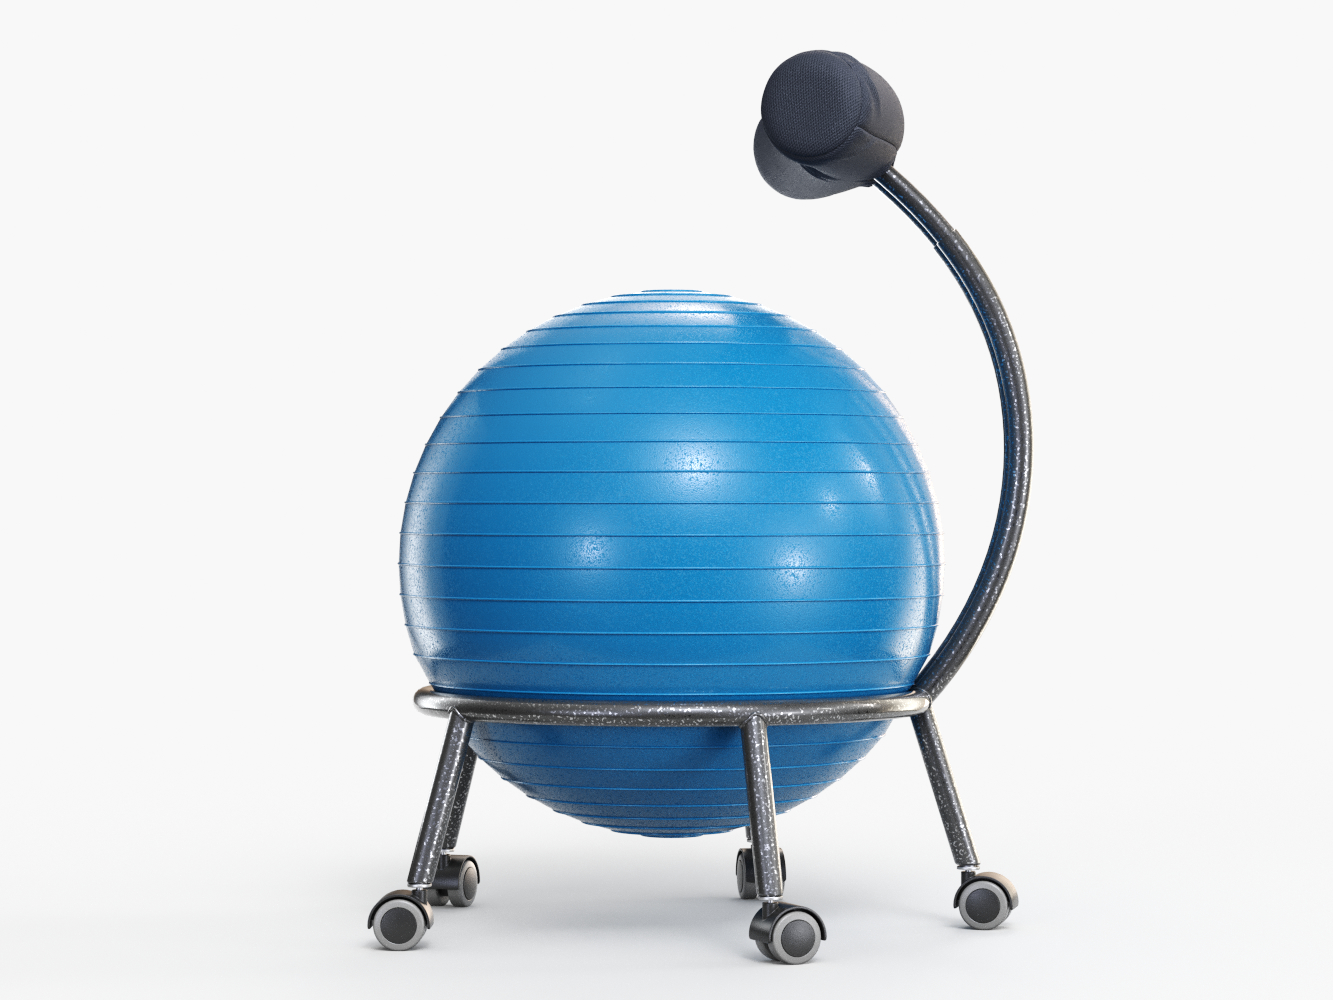 Yoga Ball Office Chair 3d Model Turbosquid 1238483